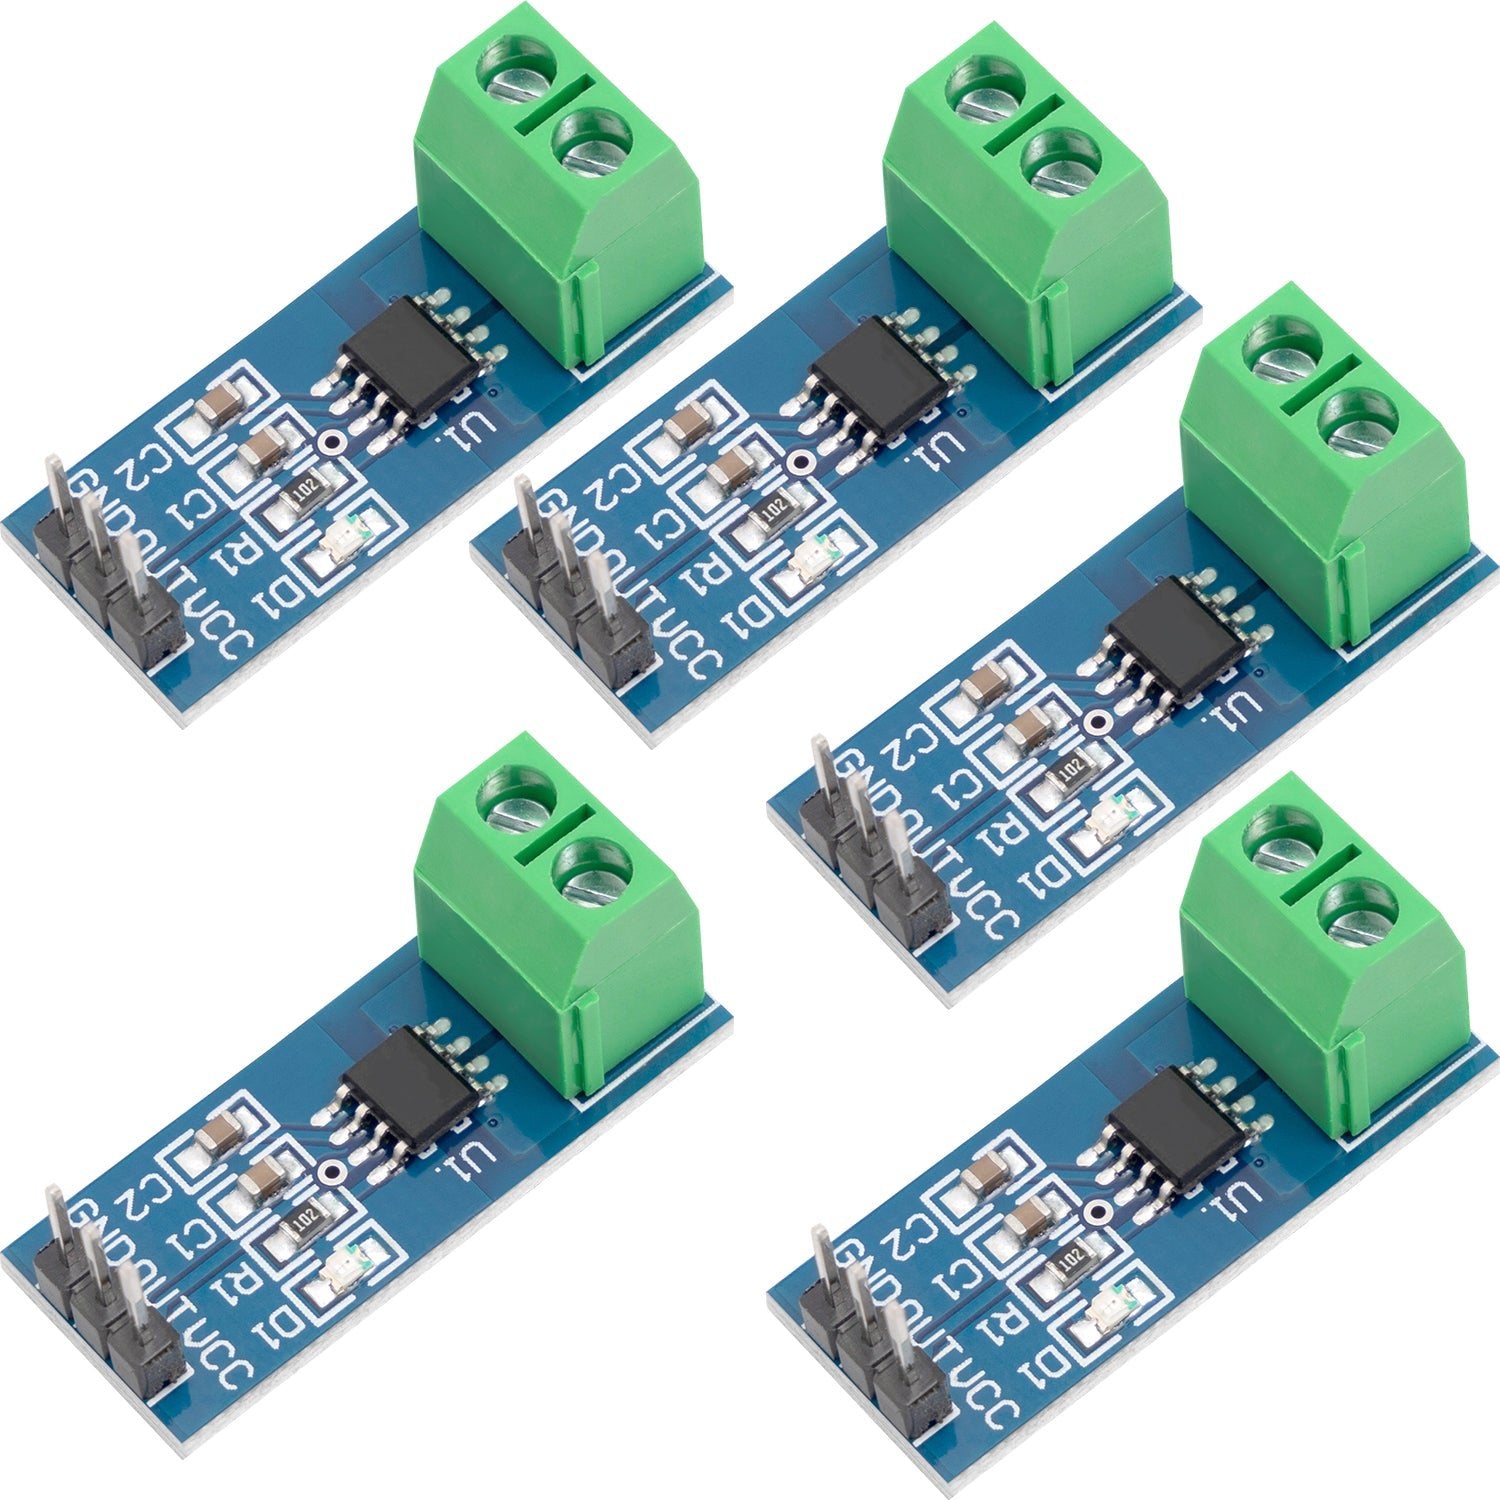 ACS712 20A Ampere Stromsensor Range Modul Current Sensor kompatibel mit Arduino - AZ-Delivery